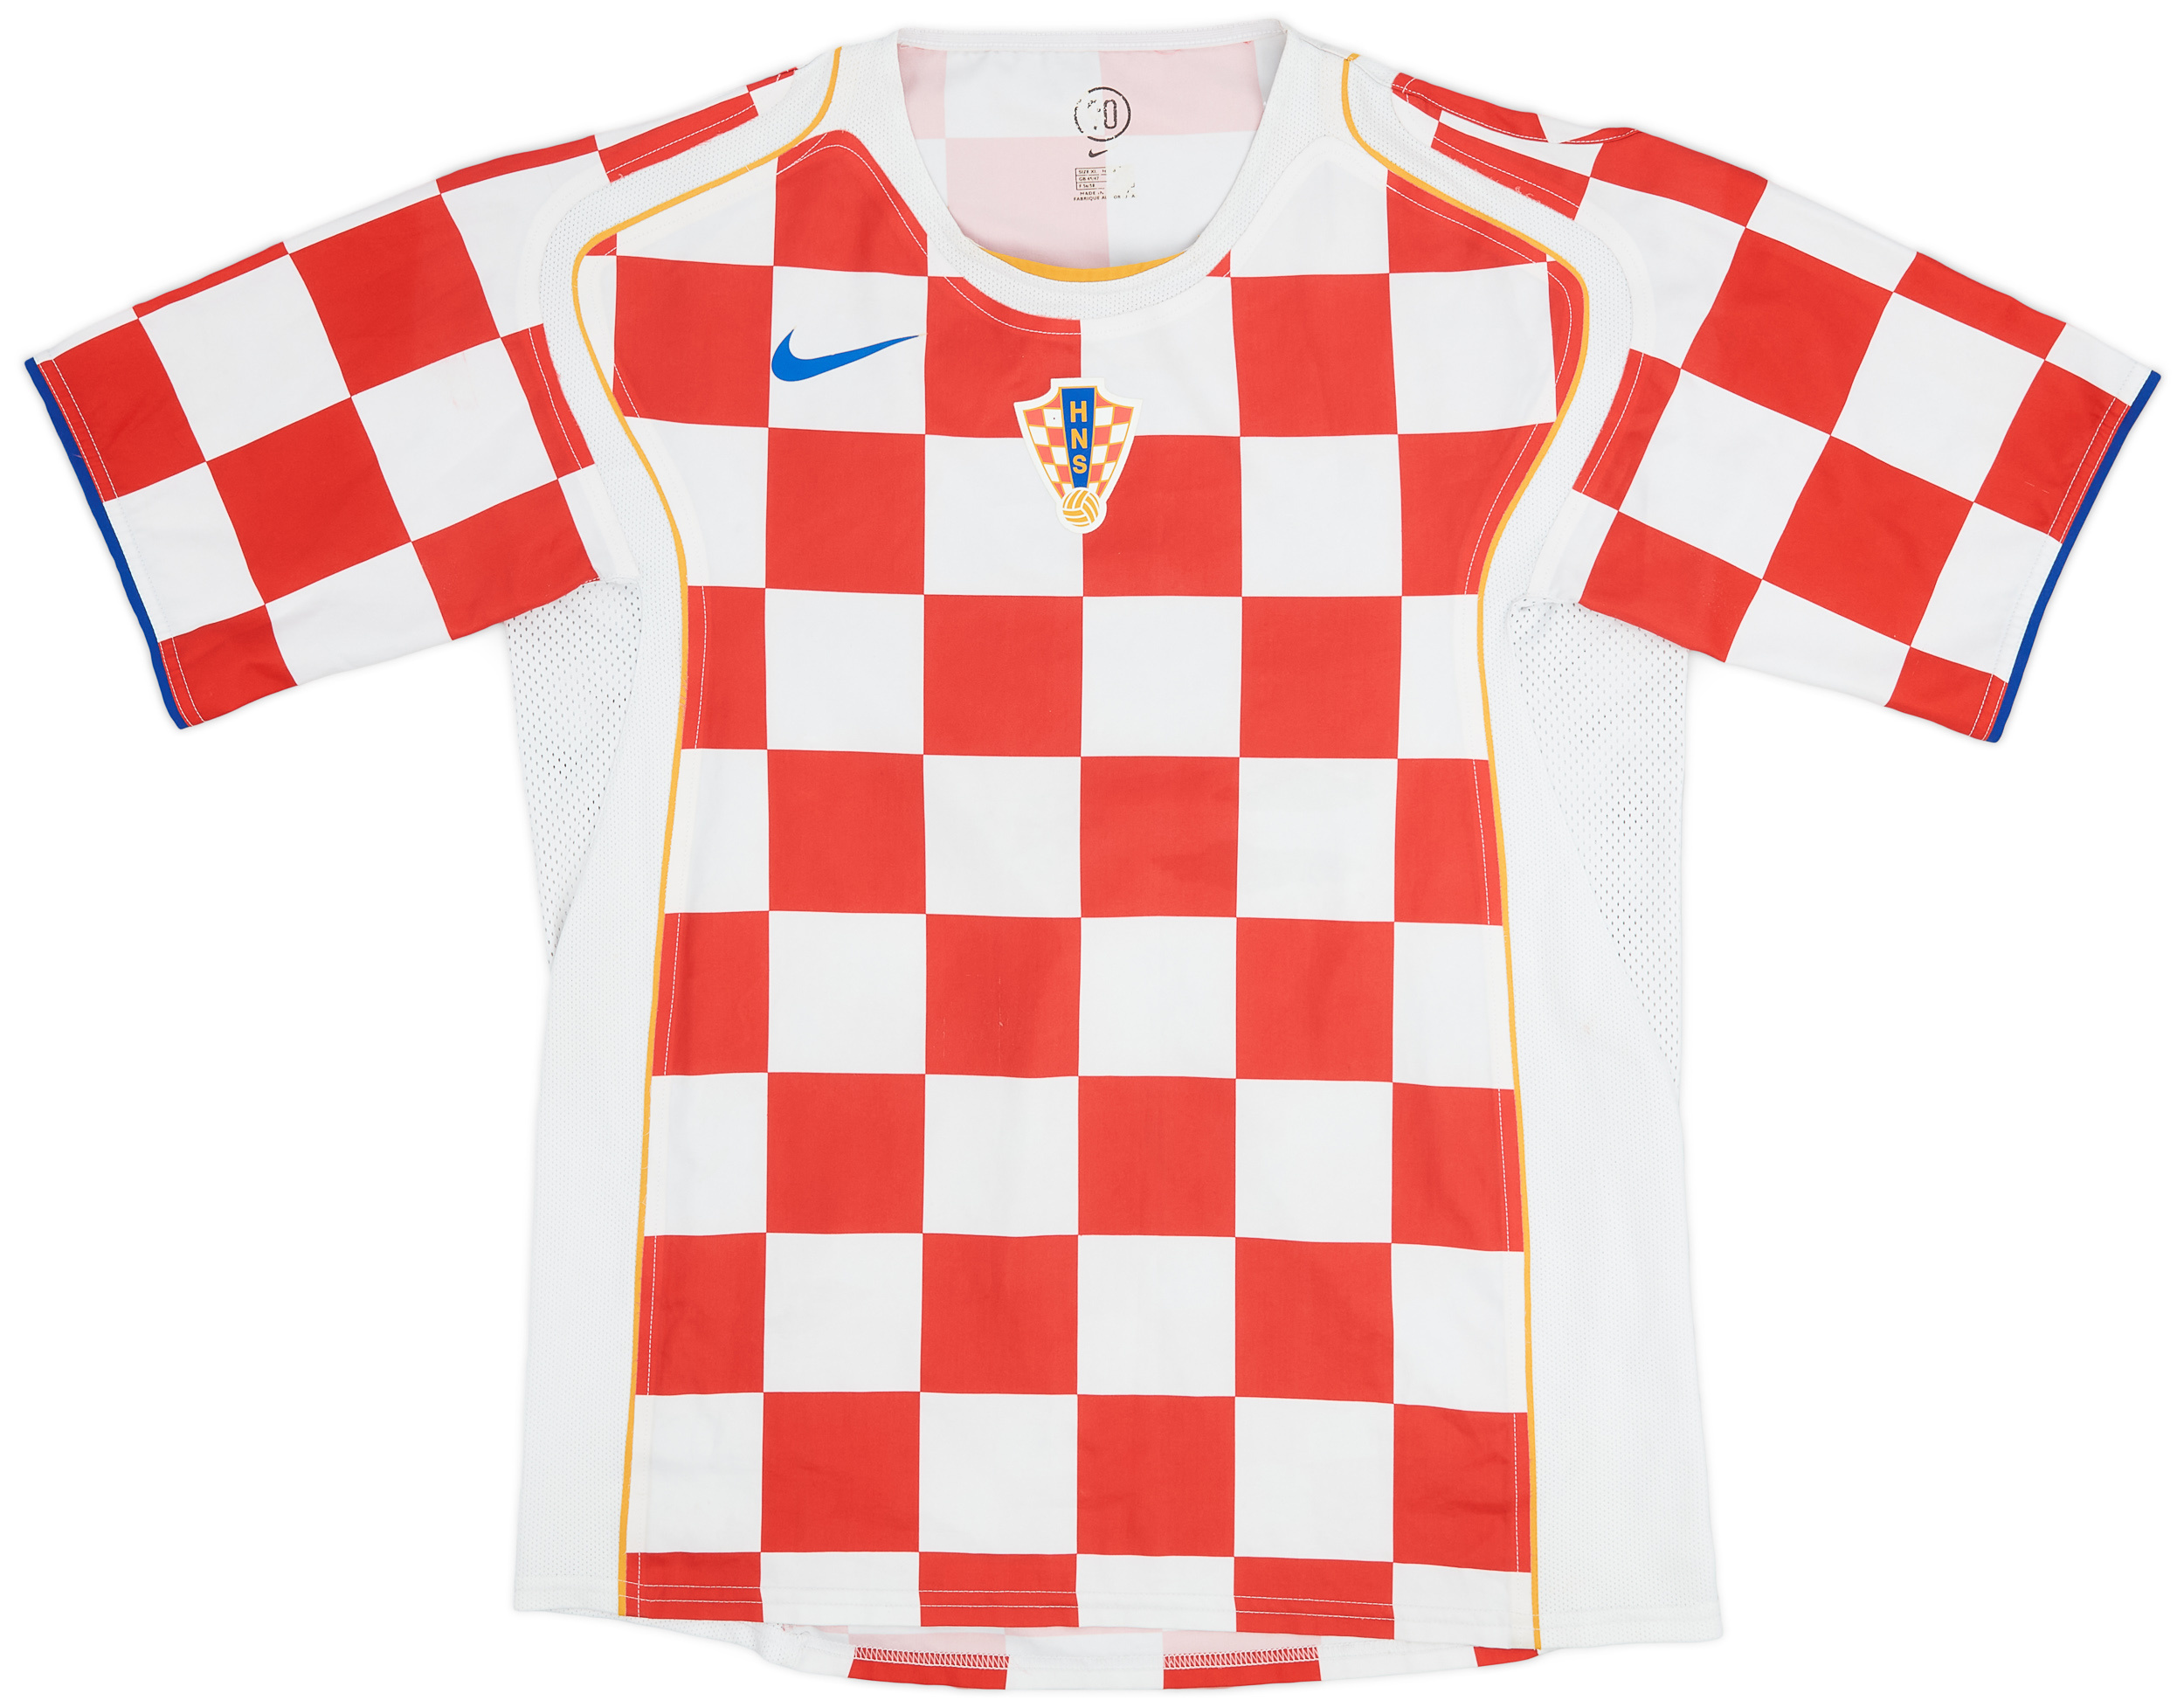 2004-06 Croatia Player Issue Home Shirt - 5/10 - ()